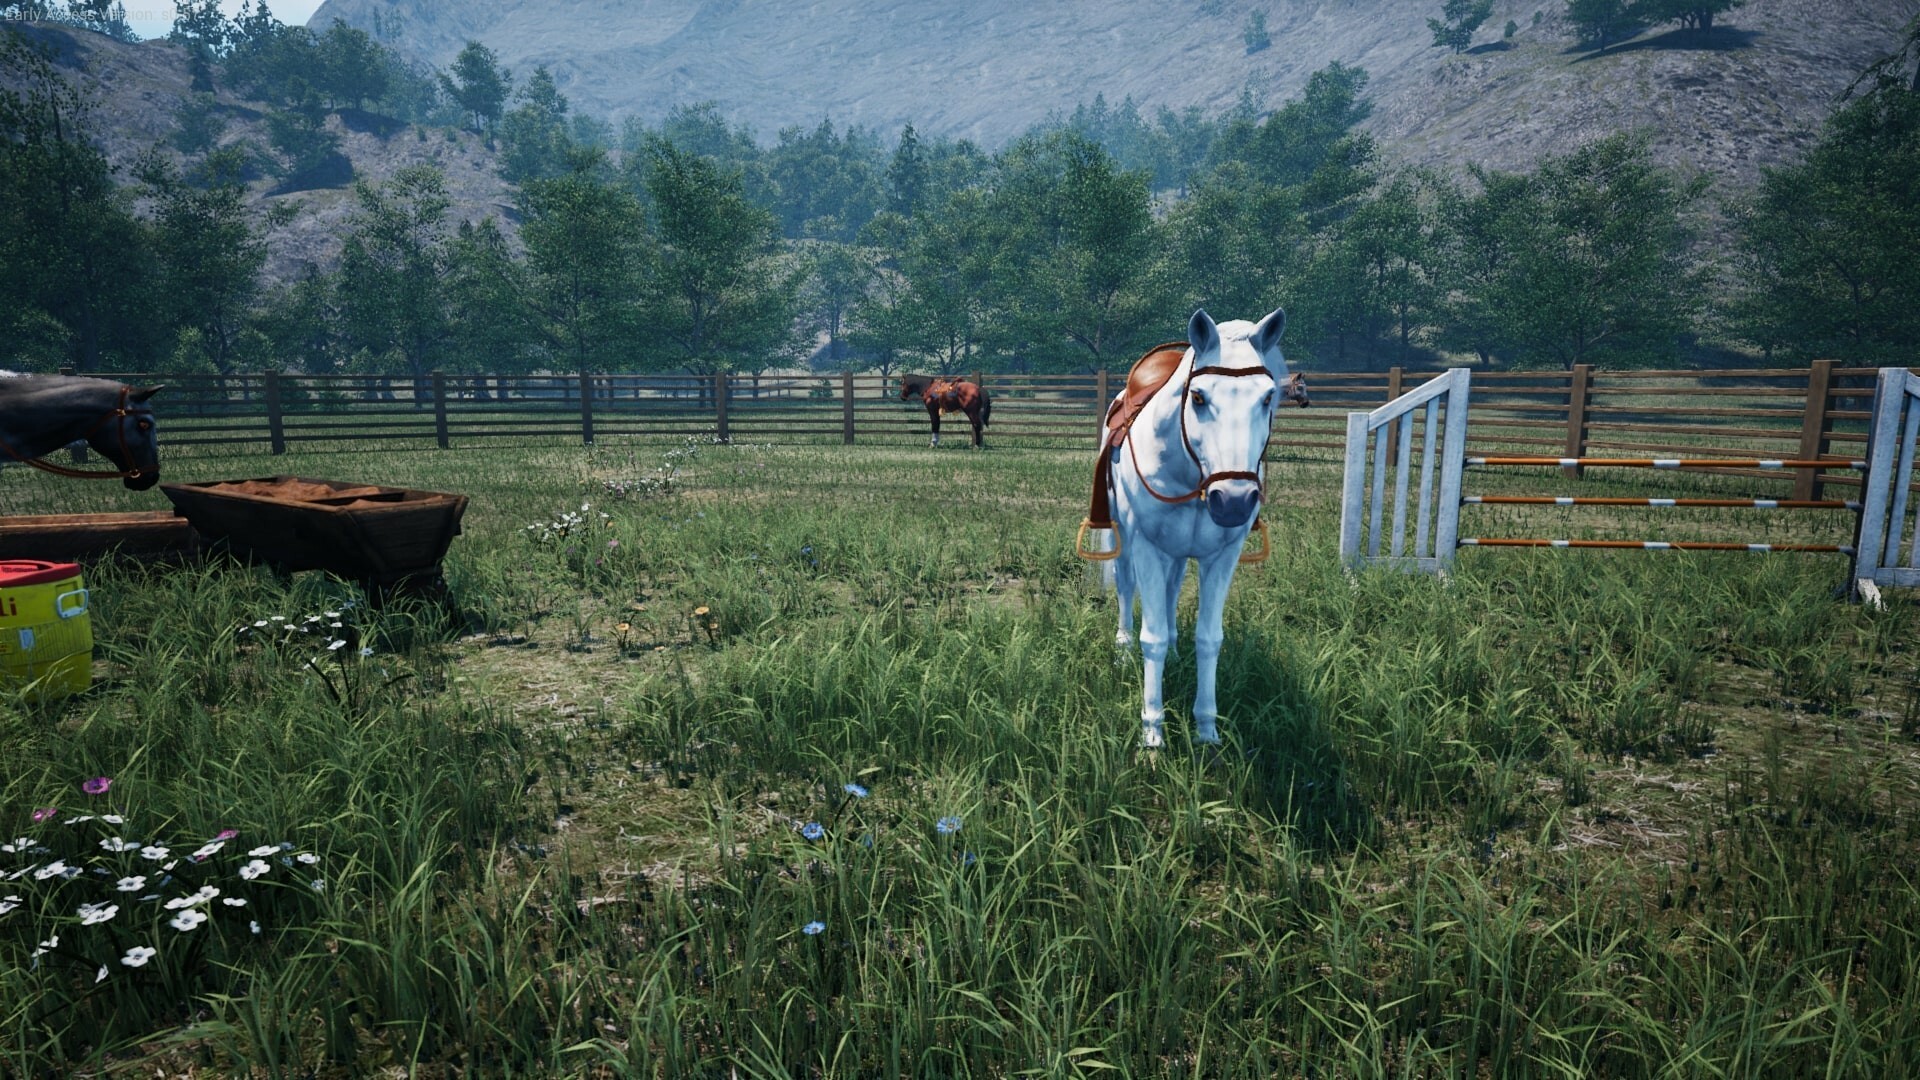 Ranch Simulator - Build, Farm, Hunt. - New Game - Day 0 